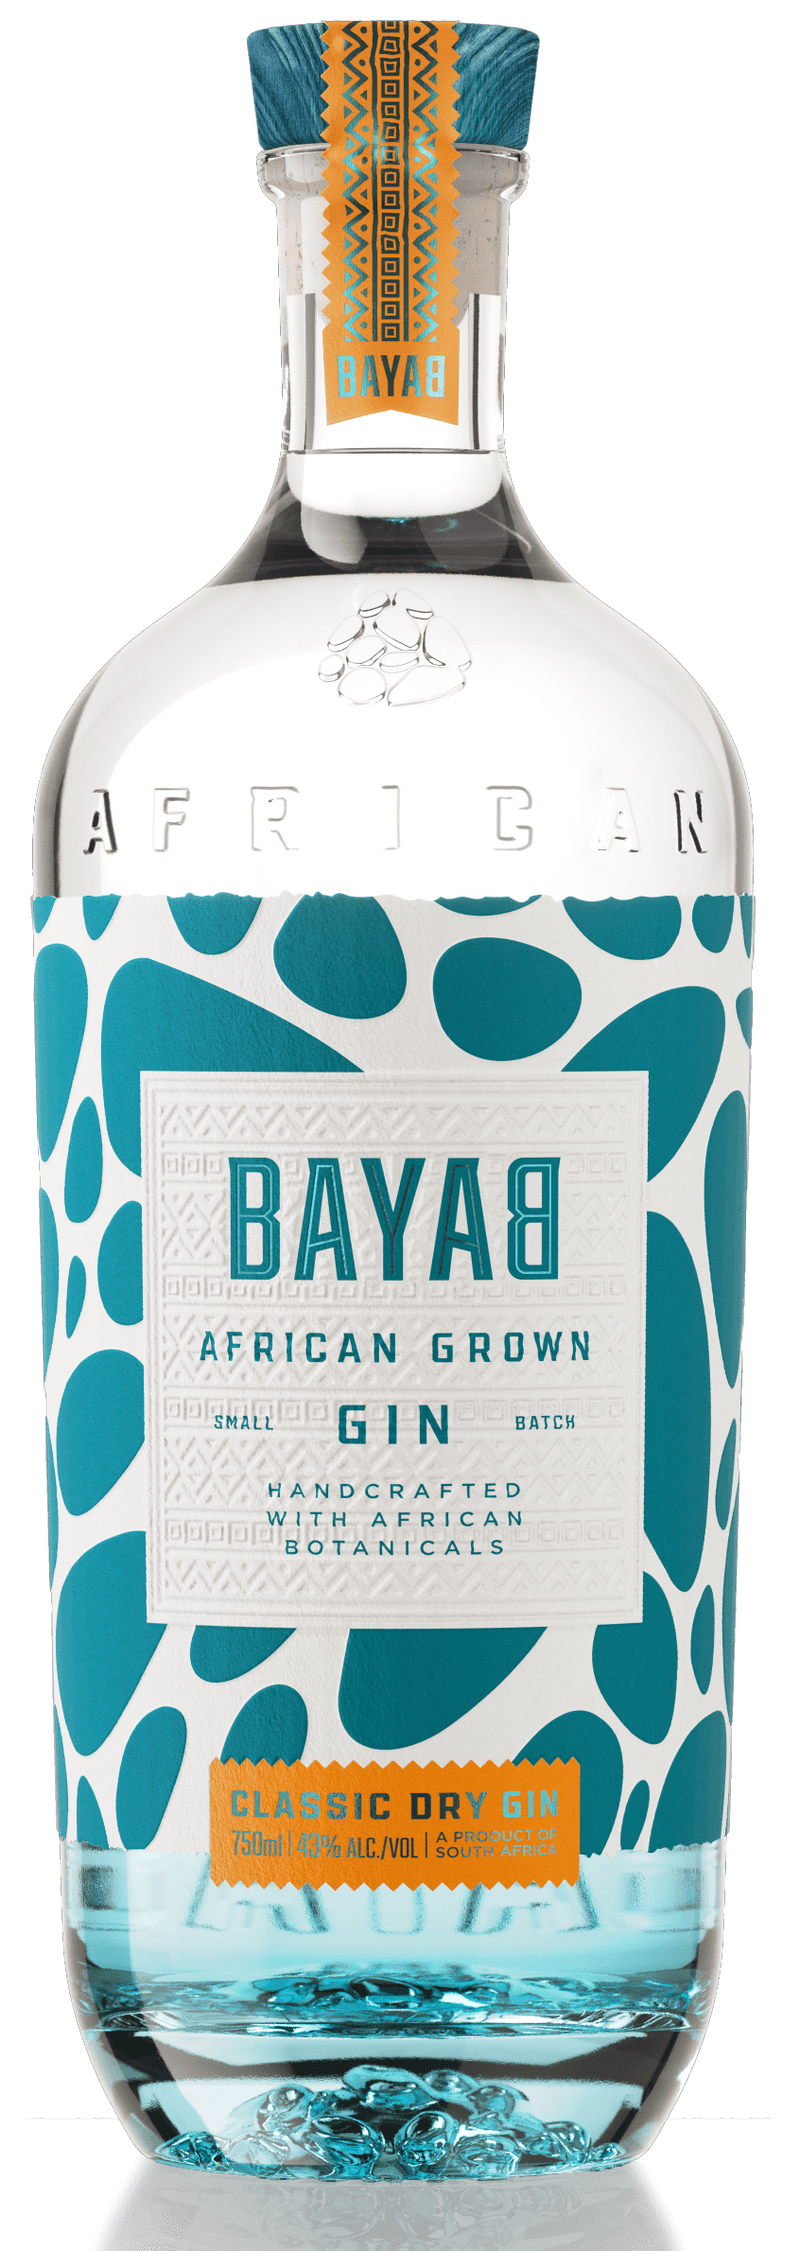 Bayab African Grown Classic Dry Gin 70cl